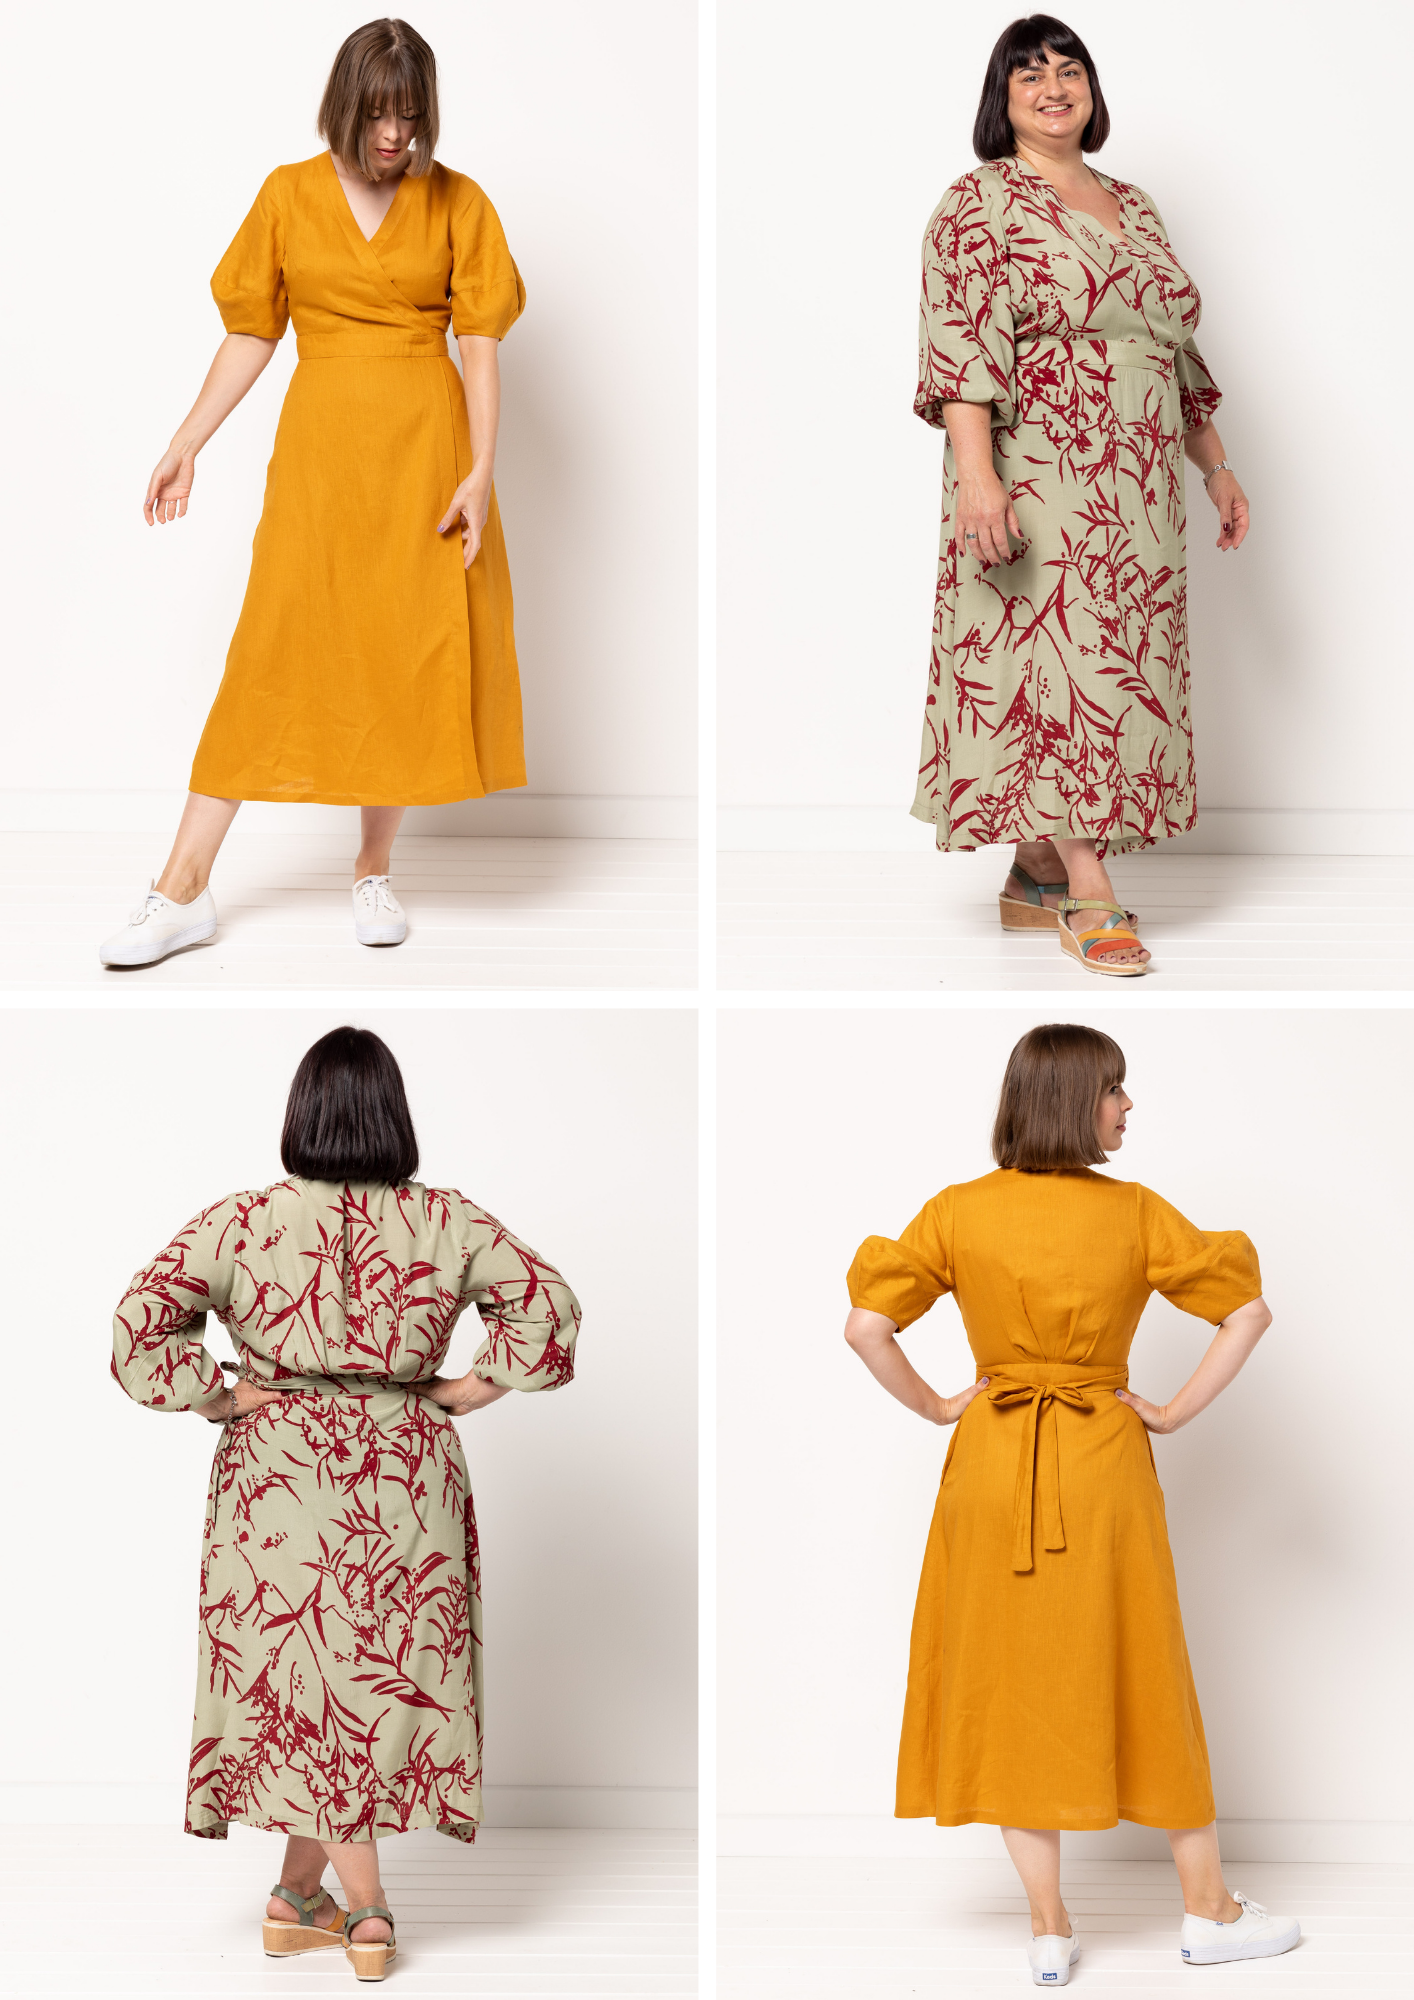 New Release Pattern - Millicent Wrap Dress